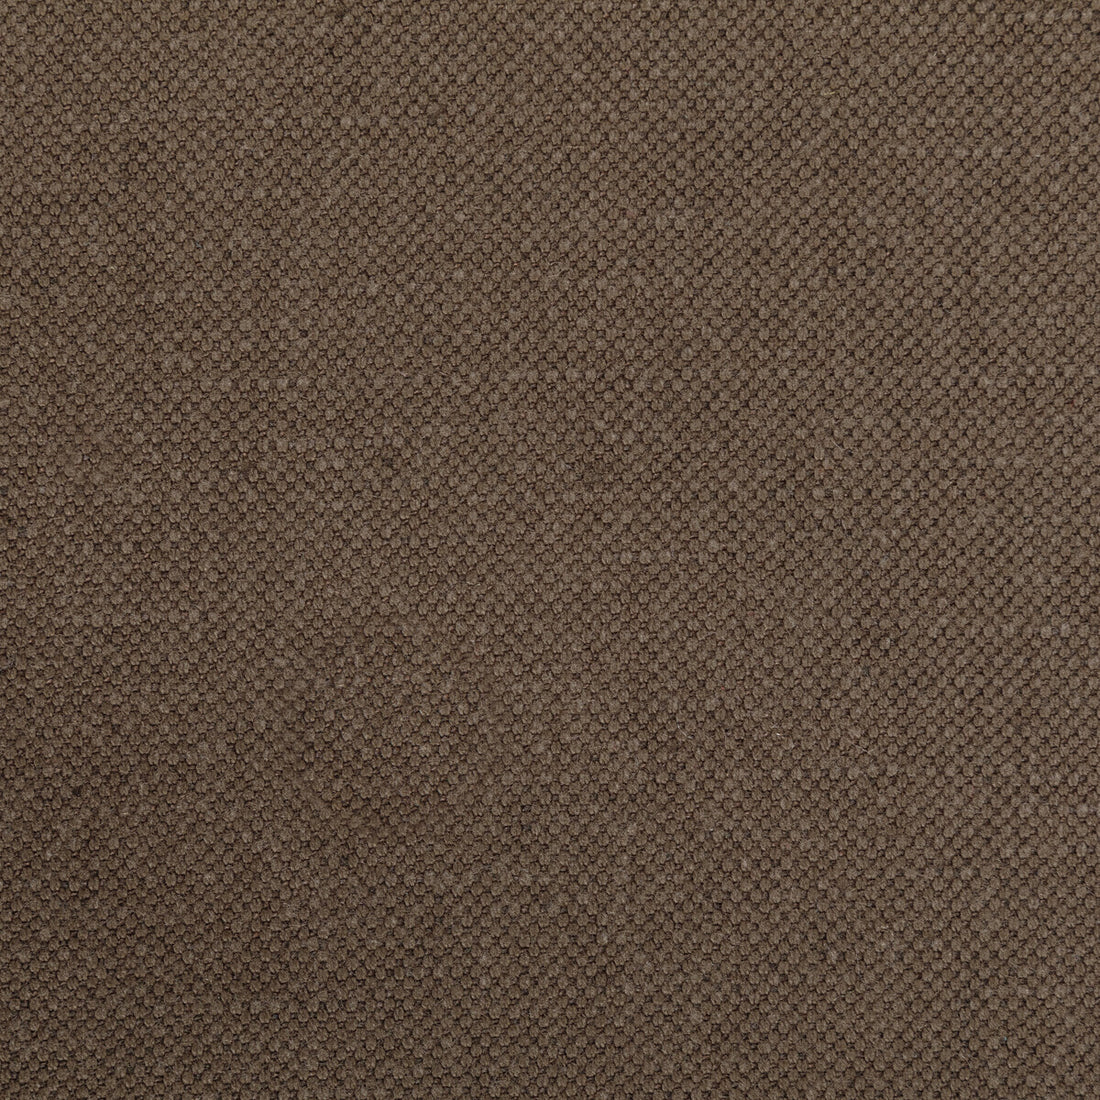 Carson fabric in mocha color - pattern 36282.66.0 - by Kravet Basics